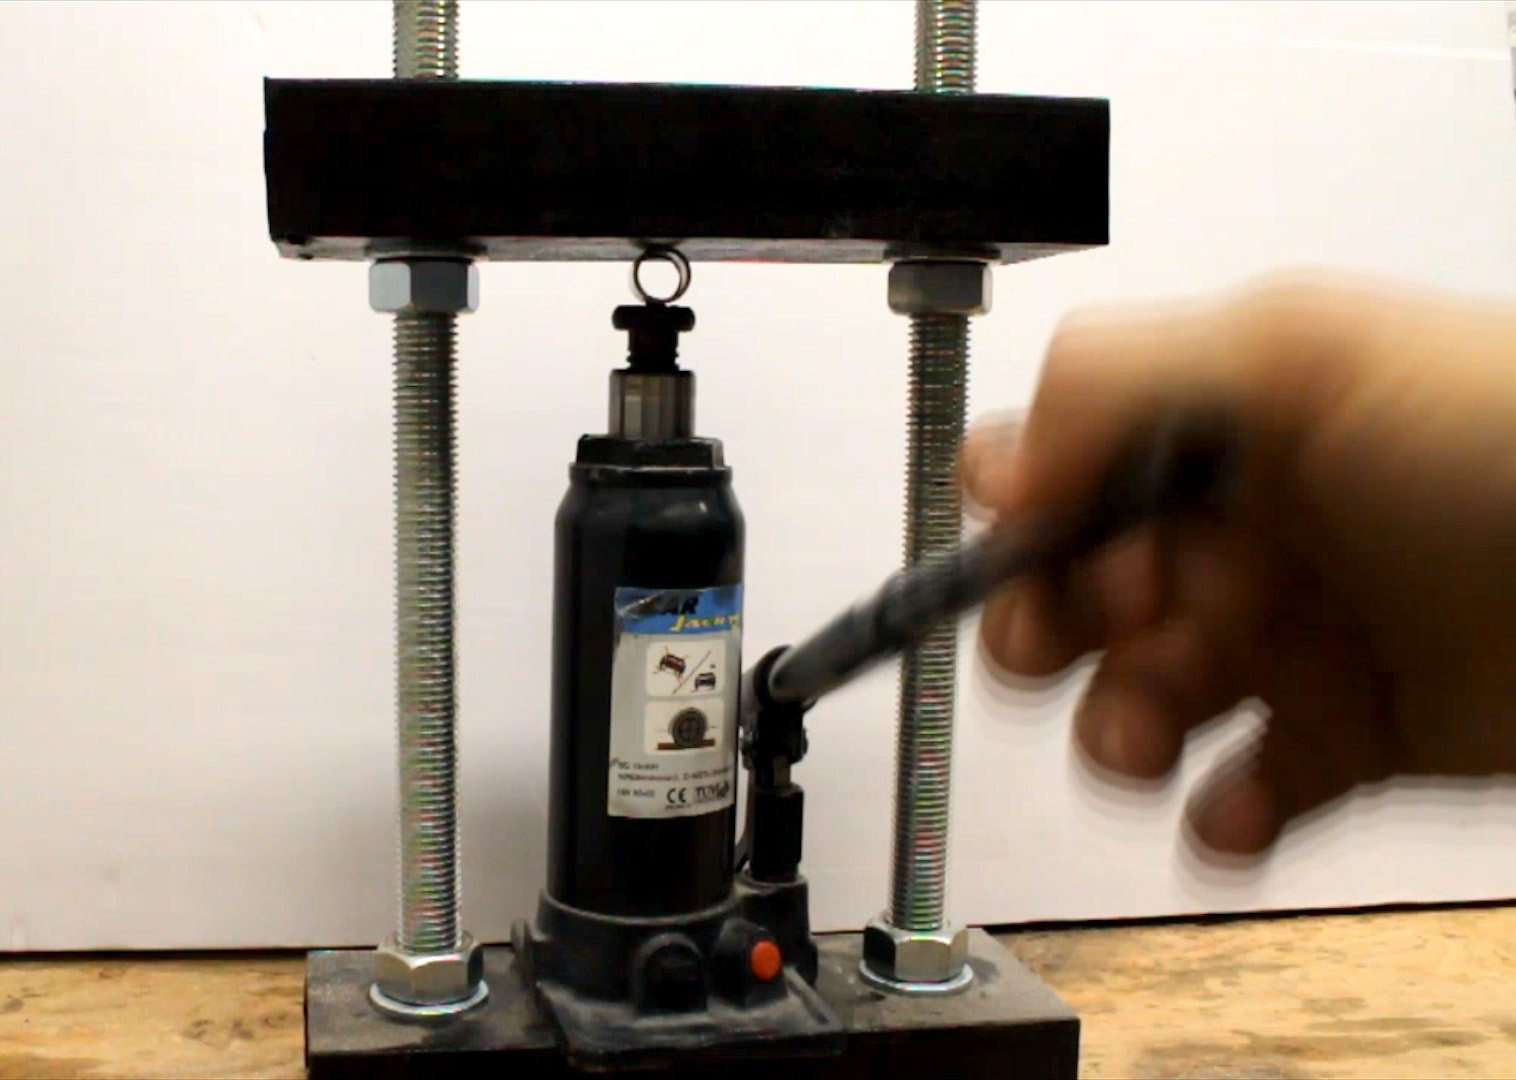 Best ideas about DIY Hydraulic Press
. Save or Pin DIY 5 Ton Hydraulic Press All Now.